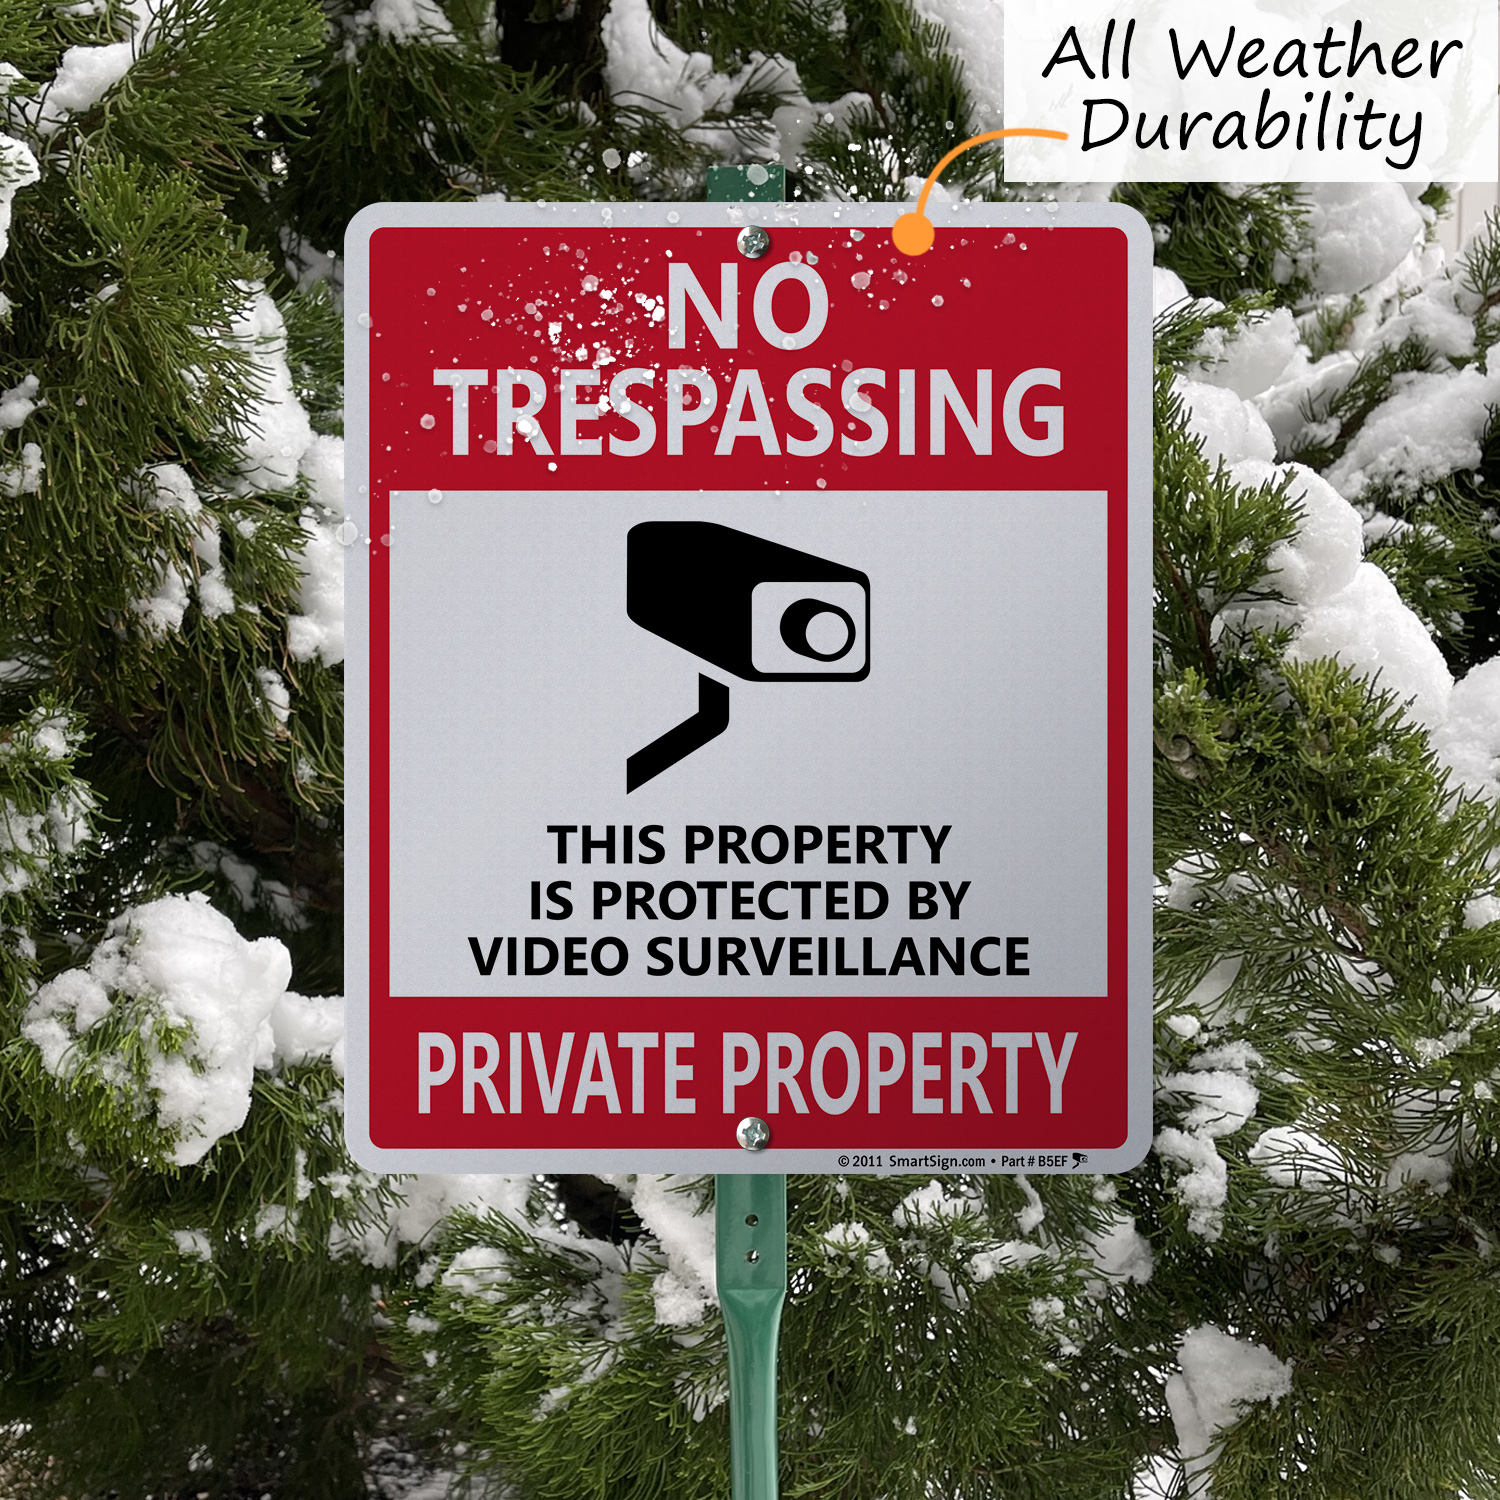 Private Property No Trespassing No Soliciting Video Surveillance Sign 8"x12" B 